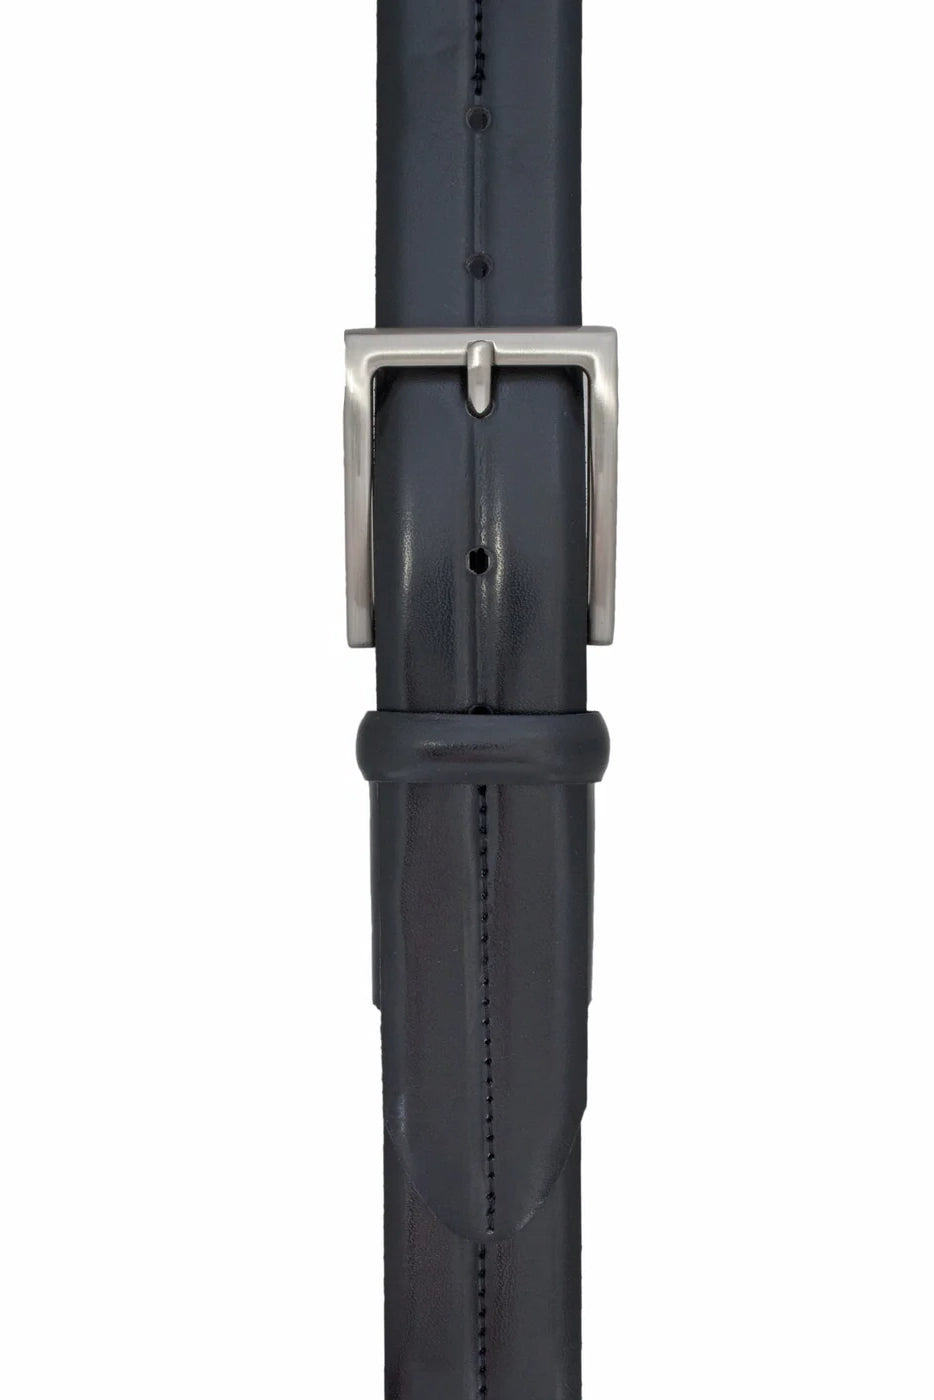 Extensible Custom Leather Belt in Black color